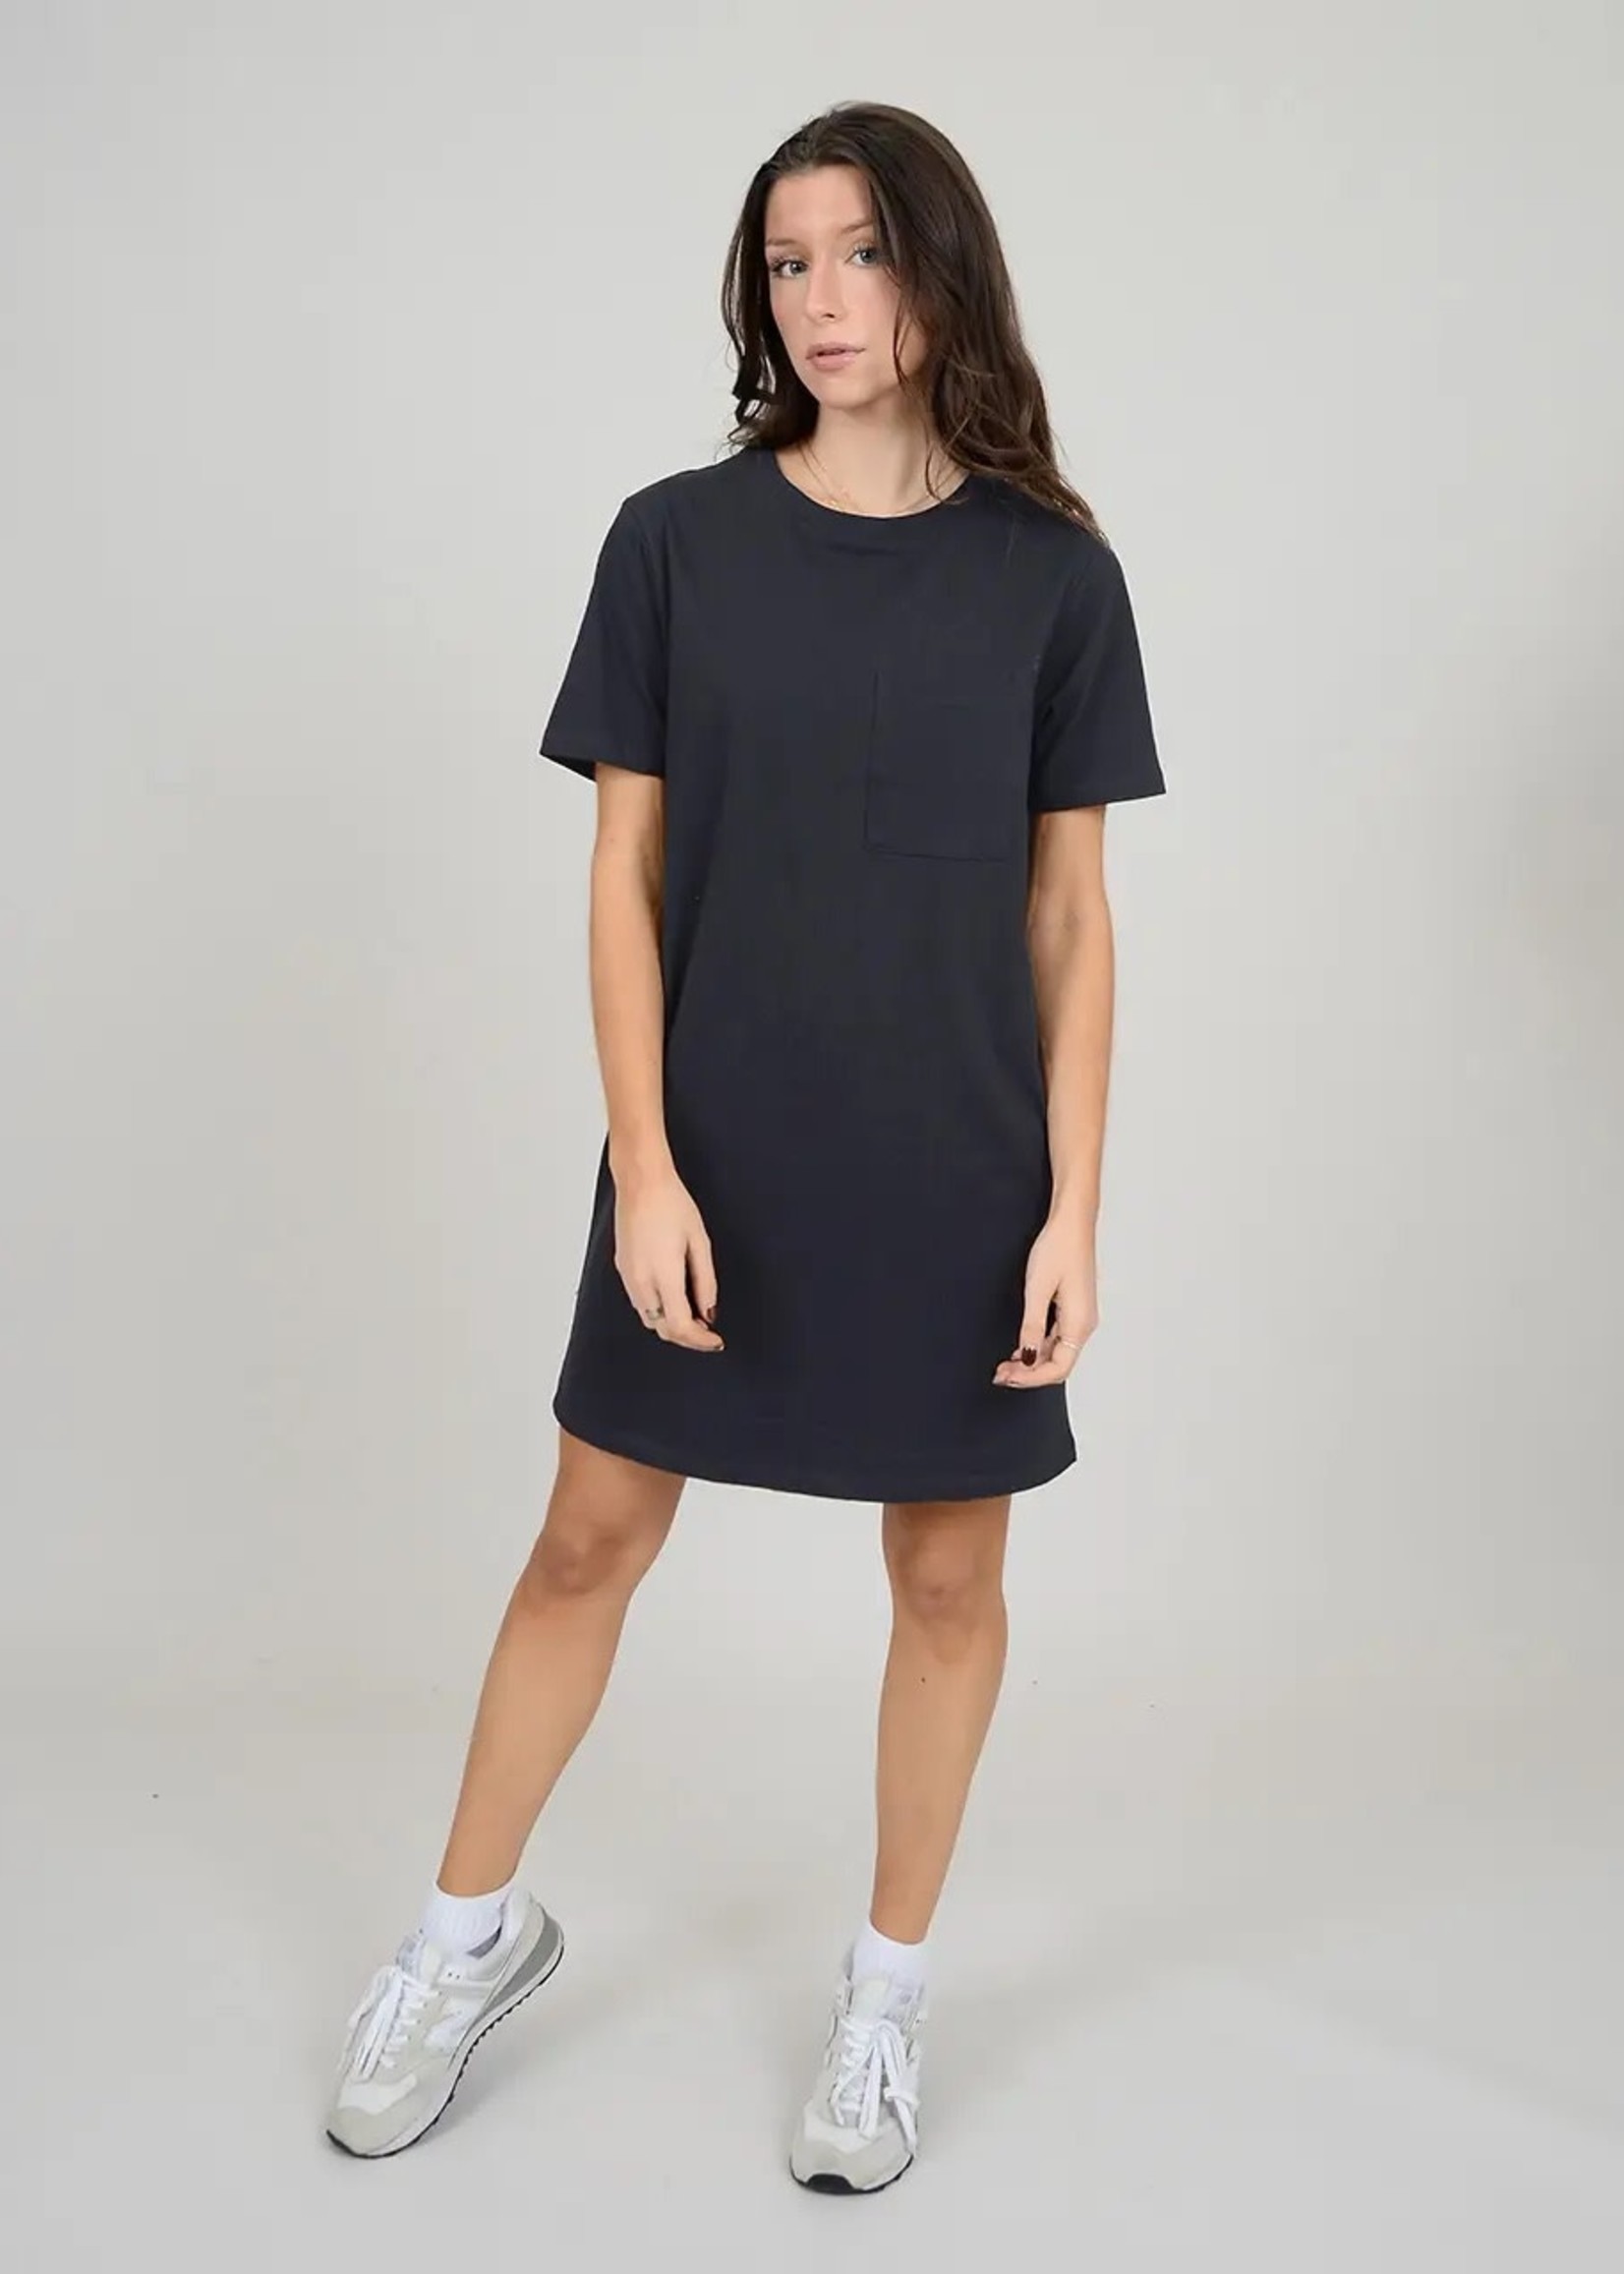 RD STYLE DARA T-Shirt Dress - LeBLANC boutique